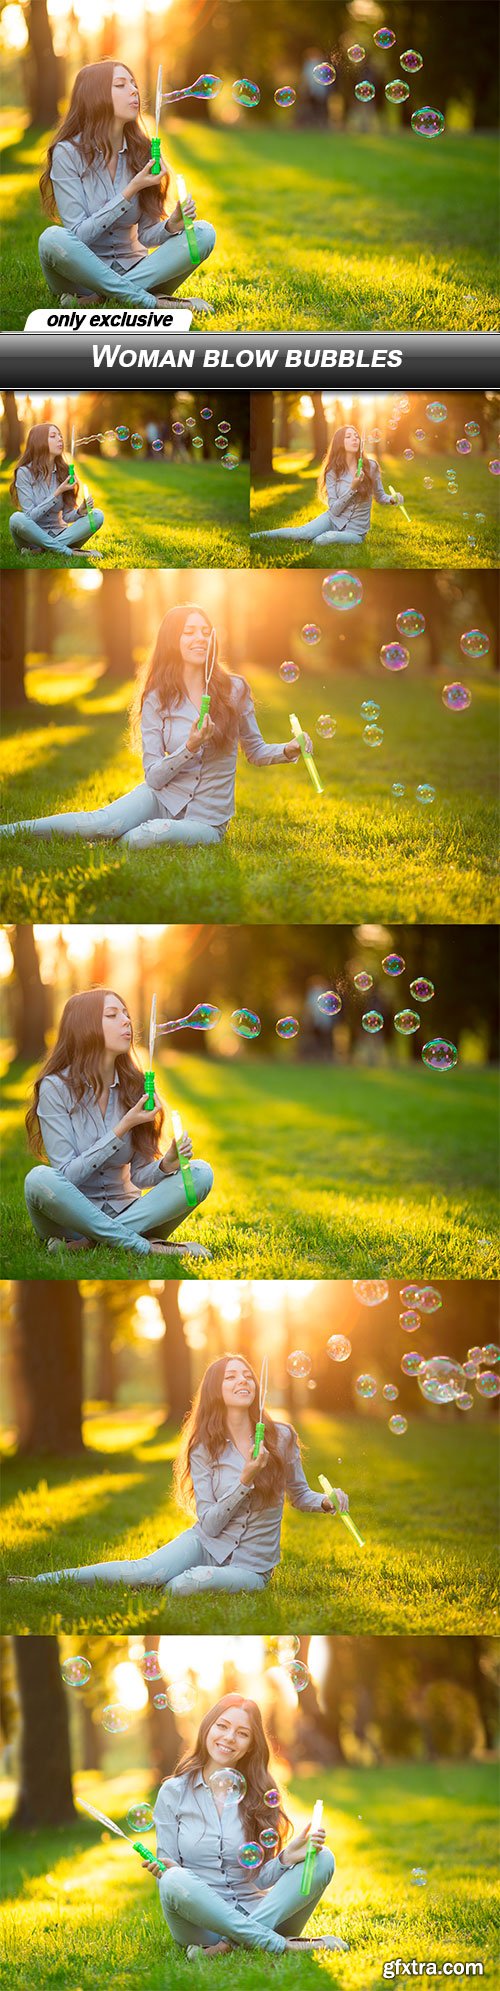 Woman blow bubbles - 6 UHQ JPEG